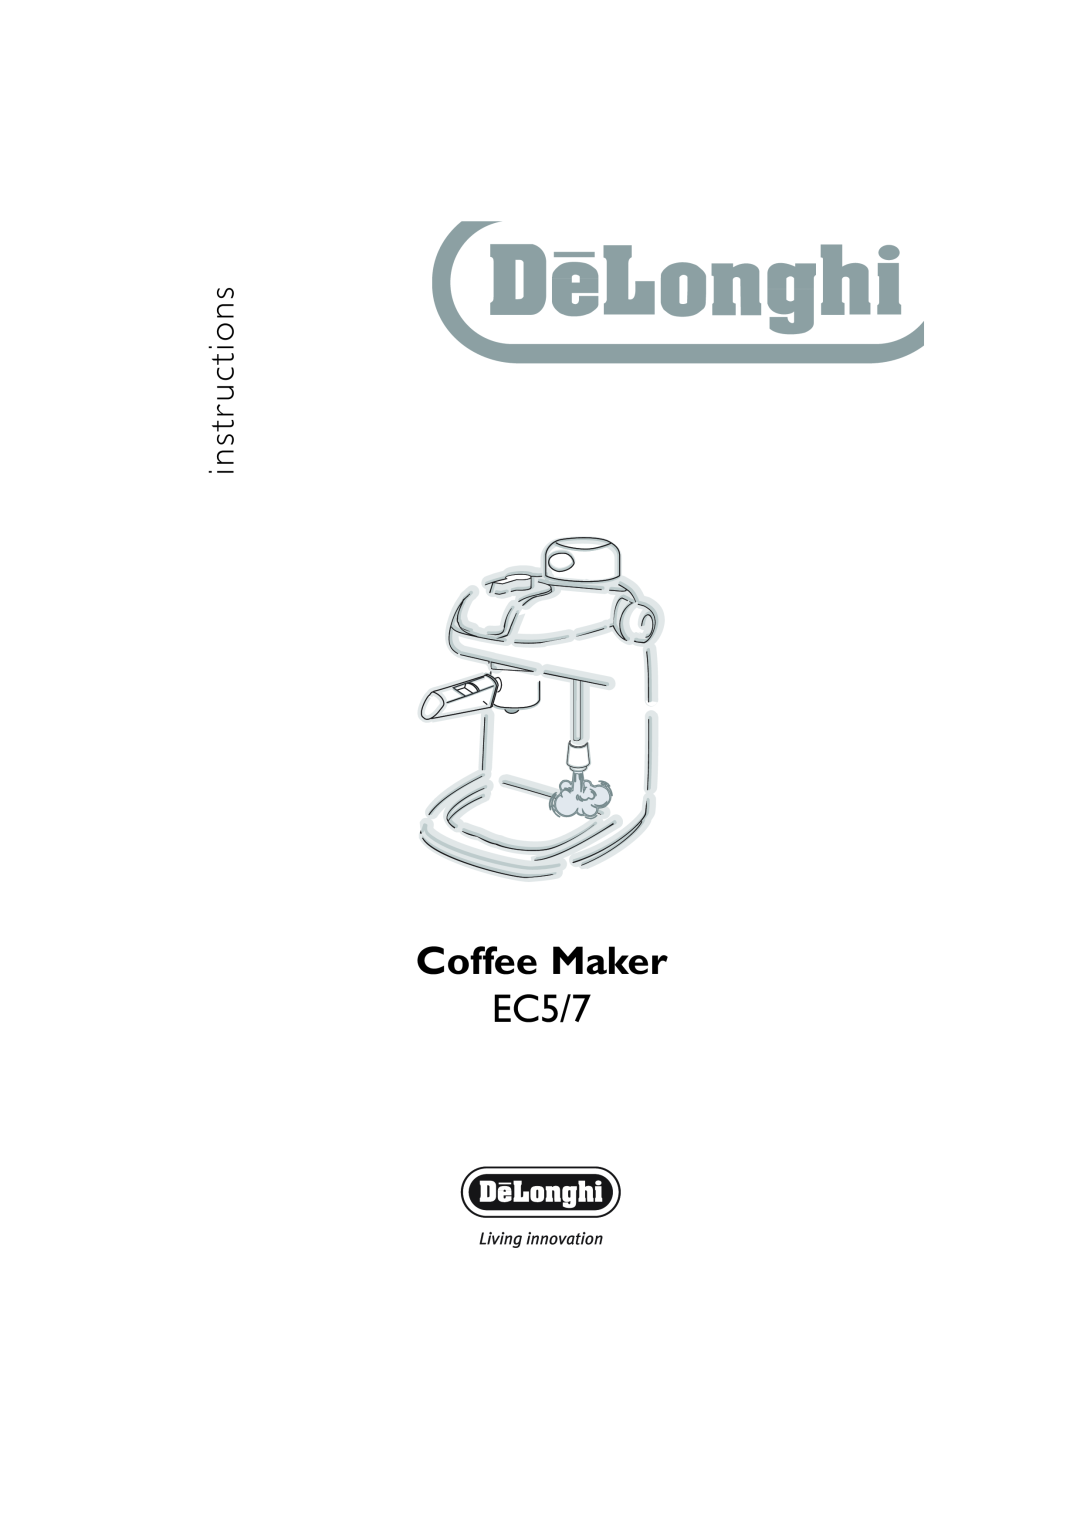 DeLonghi EC7, EC5 manual Important Safeguards, Save These Instructions, Short Cord Instructions 